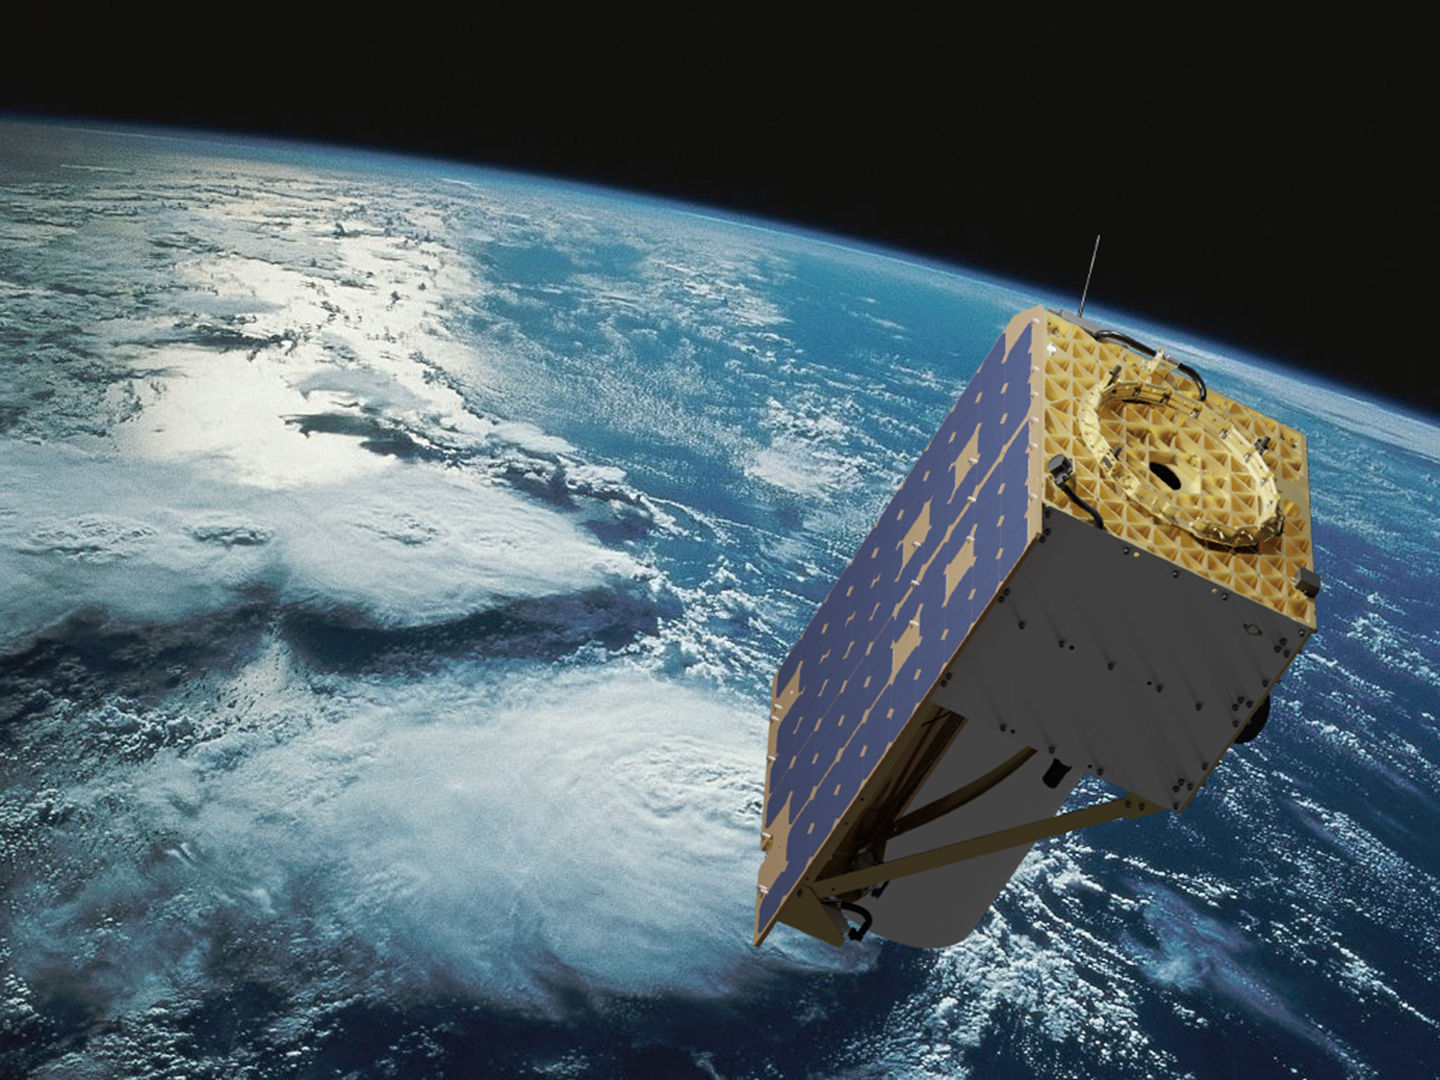 BKSY-Satellite-Single-1440